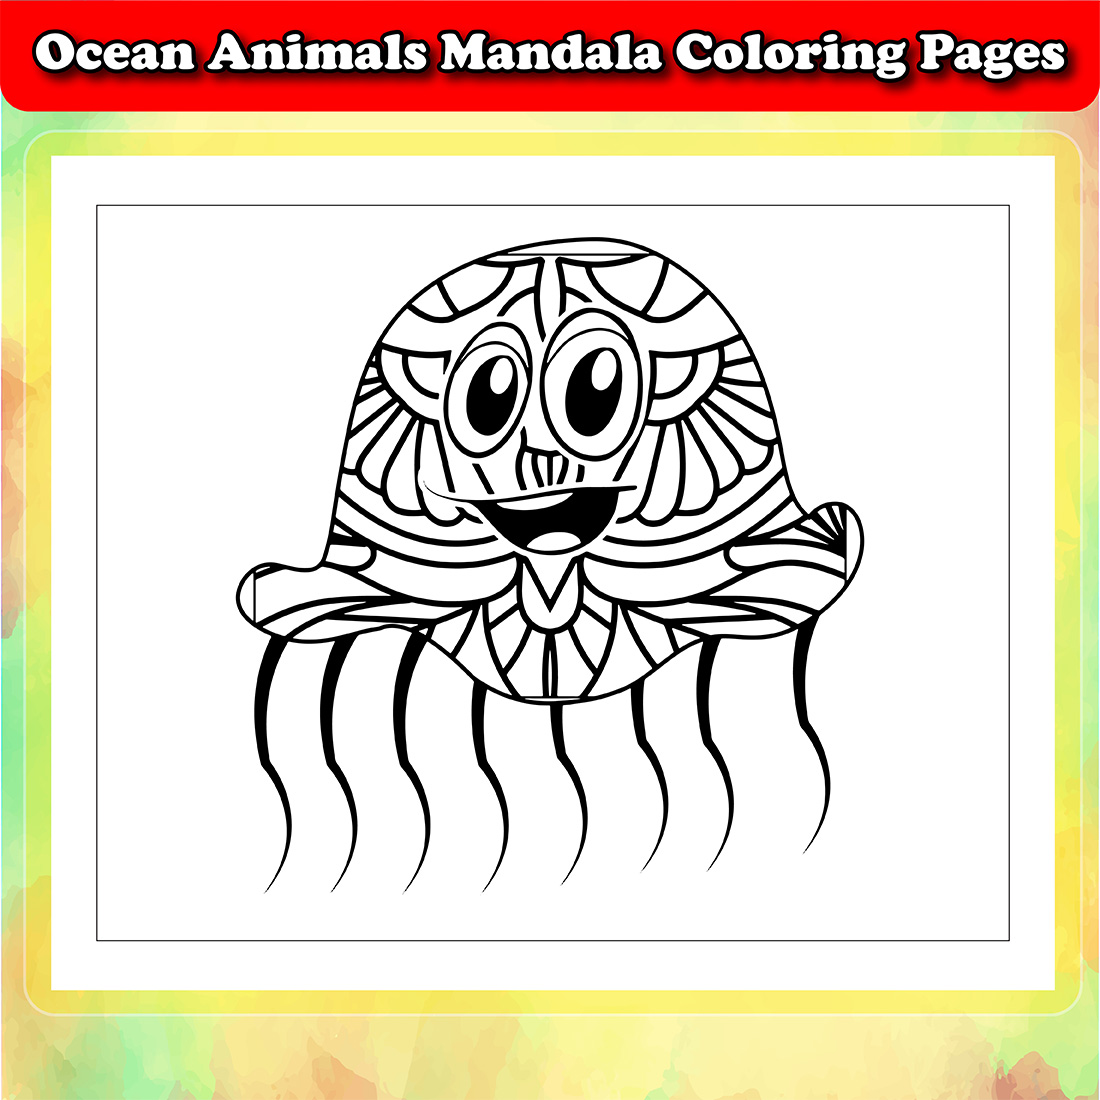 Ocean Animals Mandala Coloring Pages.